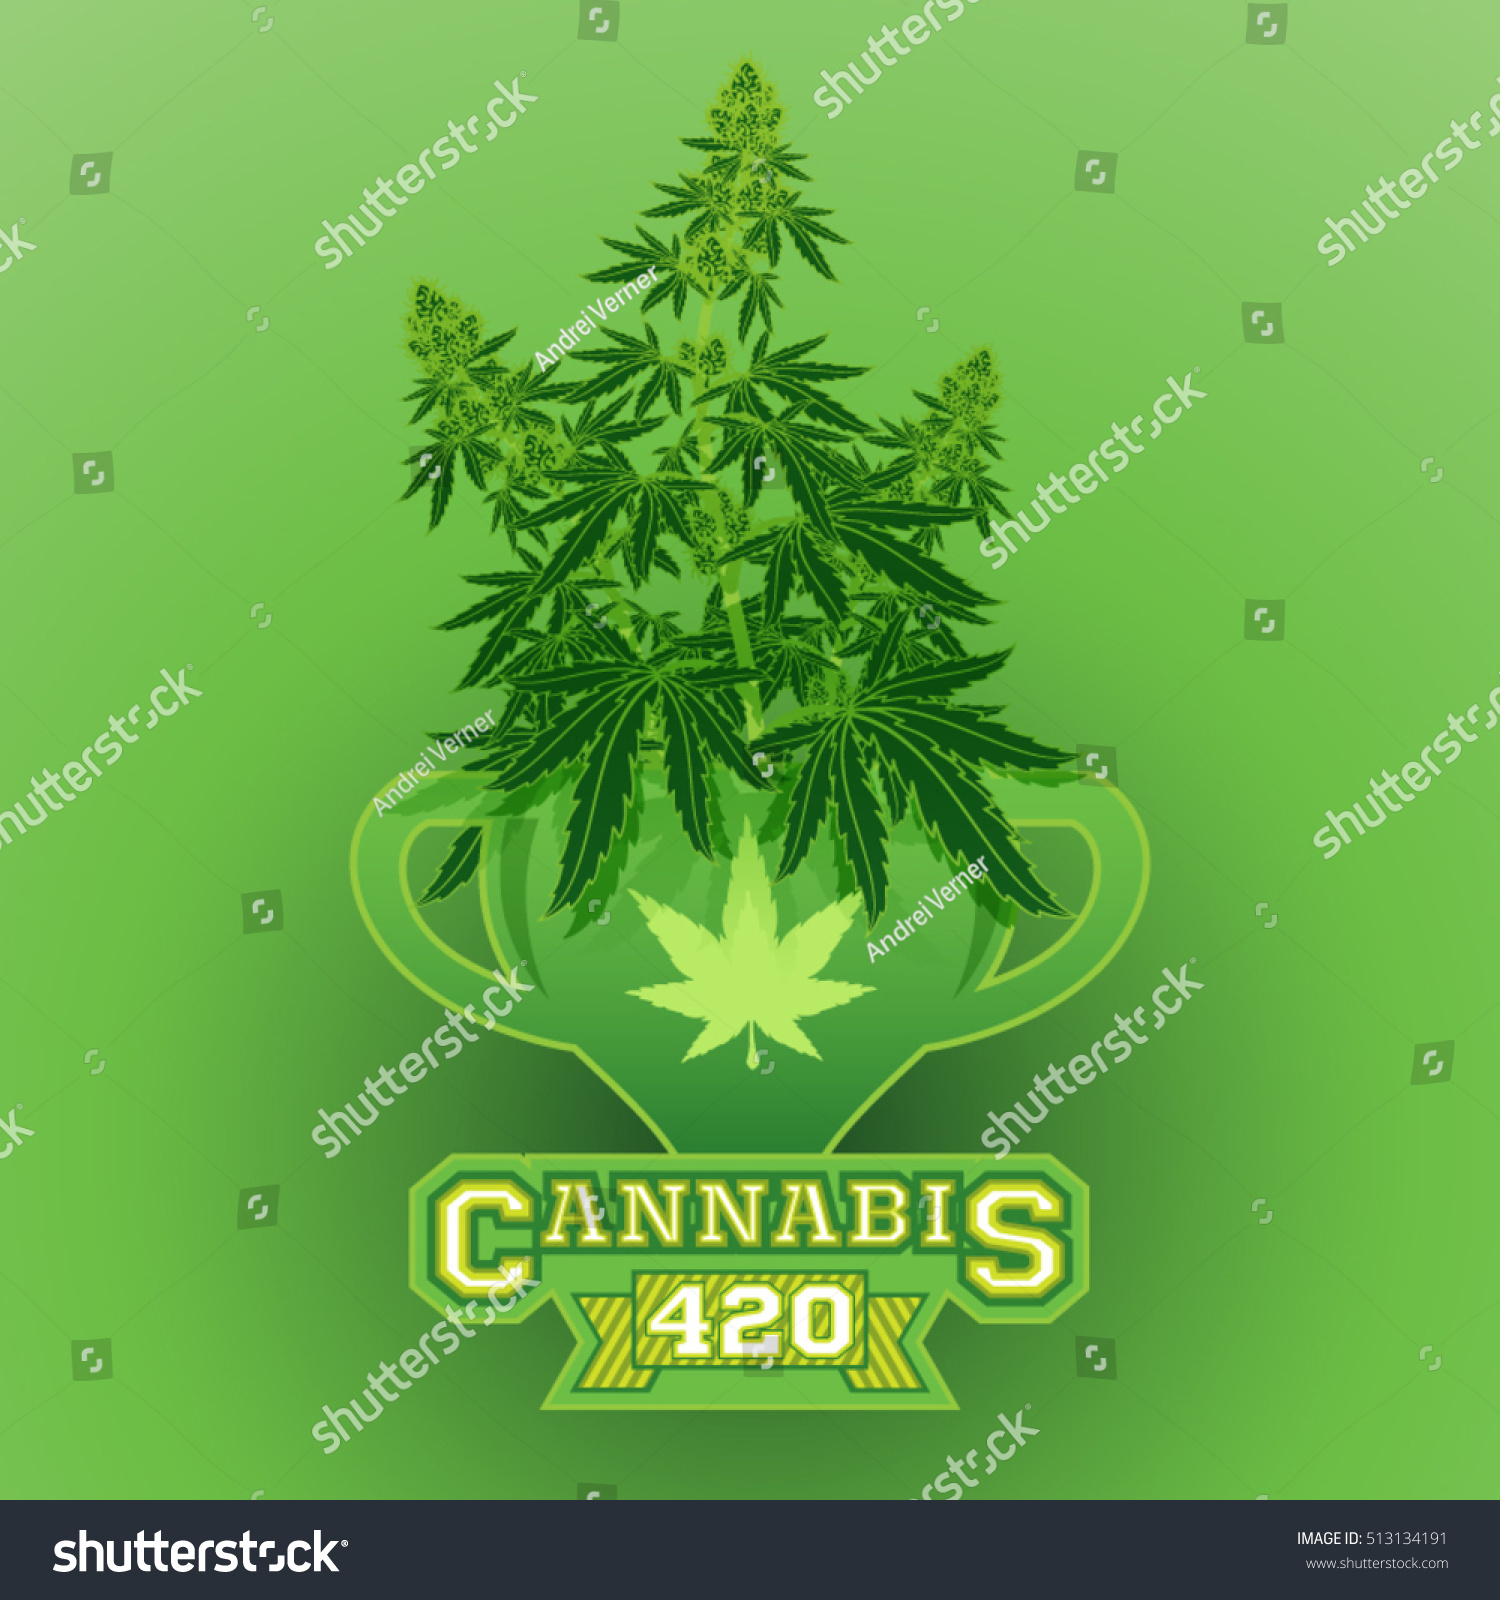 Marijuana Cannabis 420 Flyer Poster Template Layout Vector Illustration